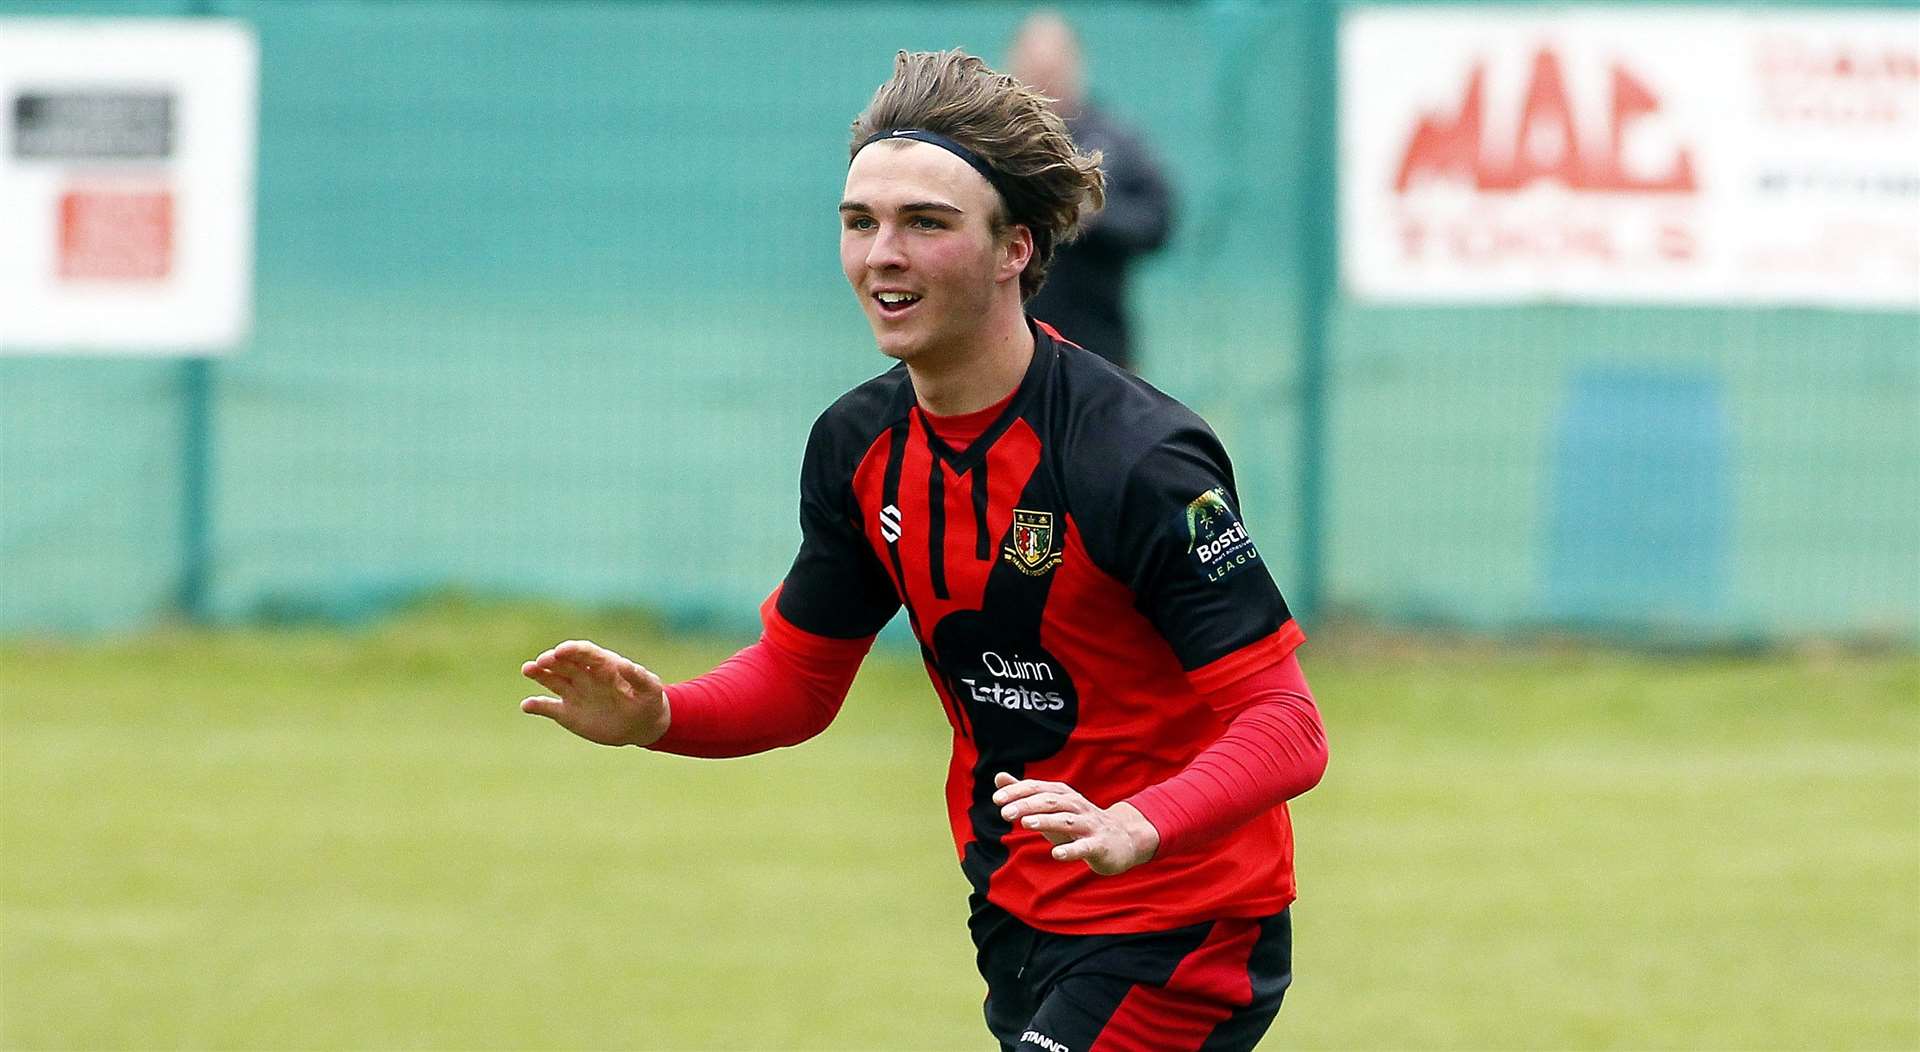 Roman Campbell celebrates a goal for Sittingbourne Picture: Sean Aidan